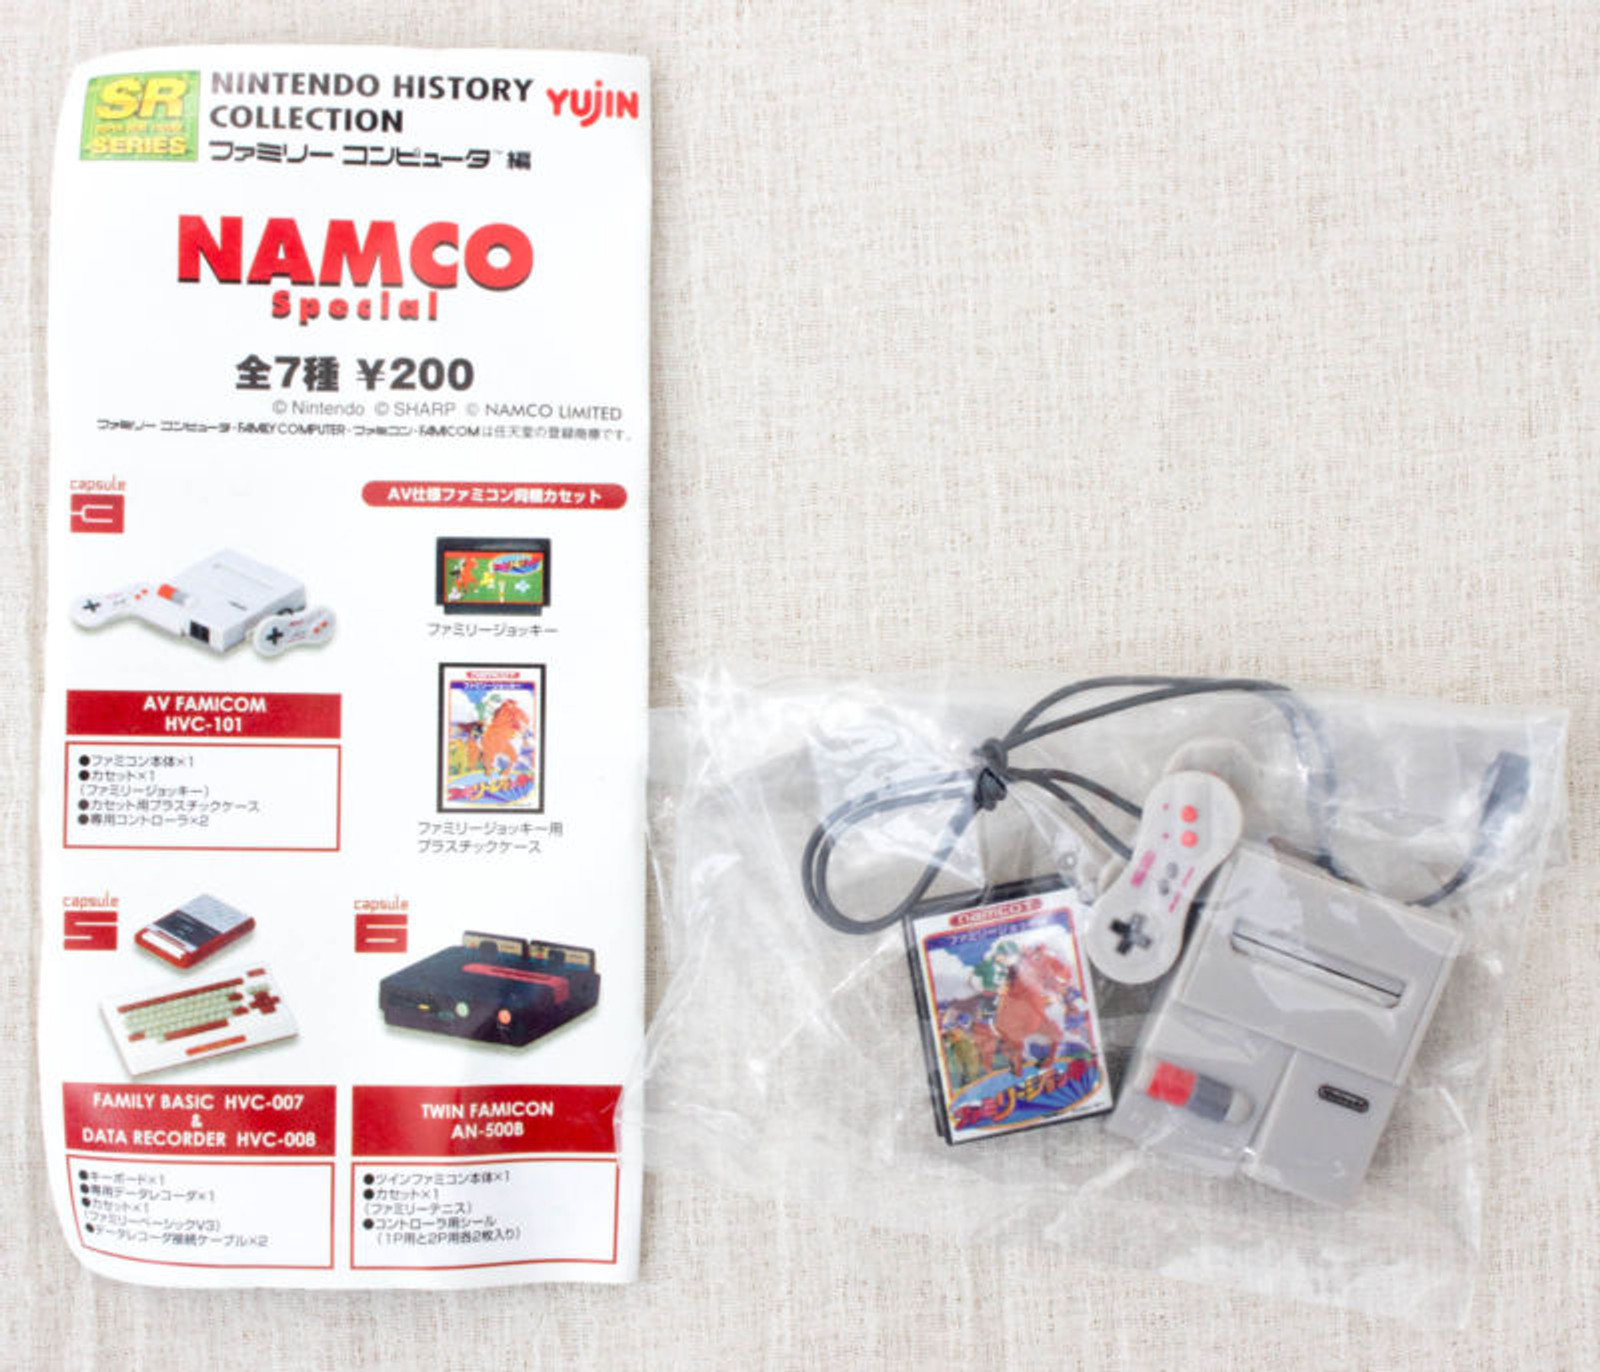 AV Famicom HVC-101 Miniature Figure Nintendo Game History NAMCO JAPAN NES